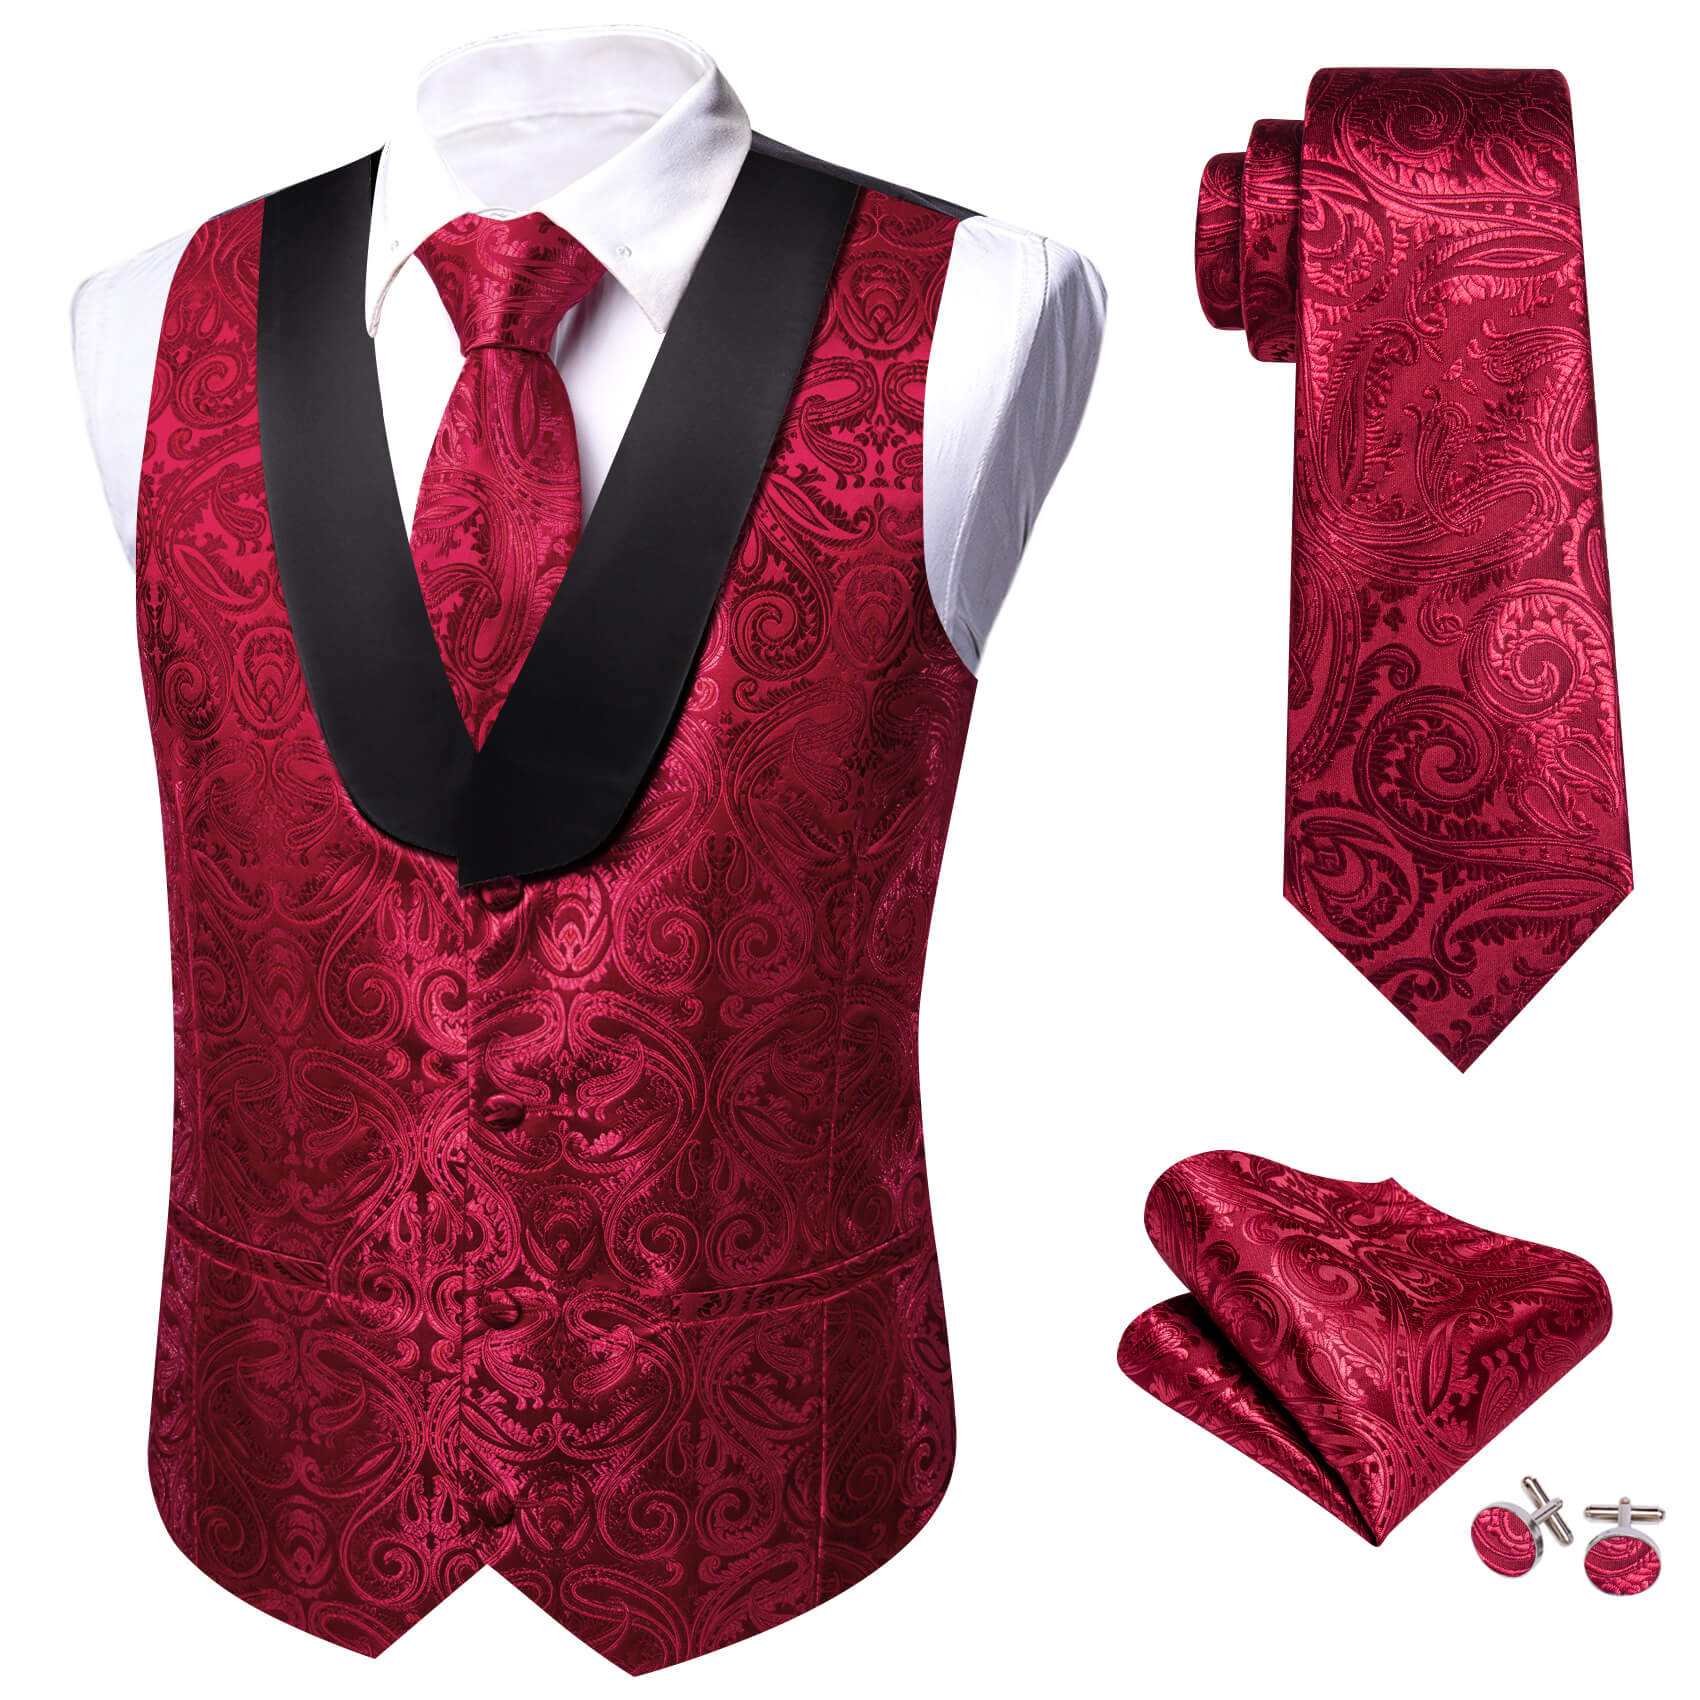 Barry.wang Men's Vest Burgundy Red Jacquard Paisley Silk Shawl Collar Vest Tie Pocket Square Cufflinks Set